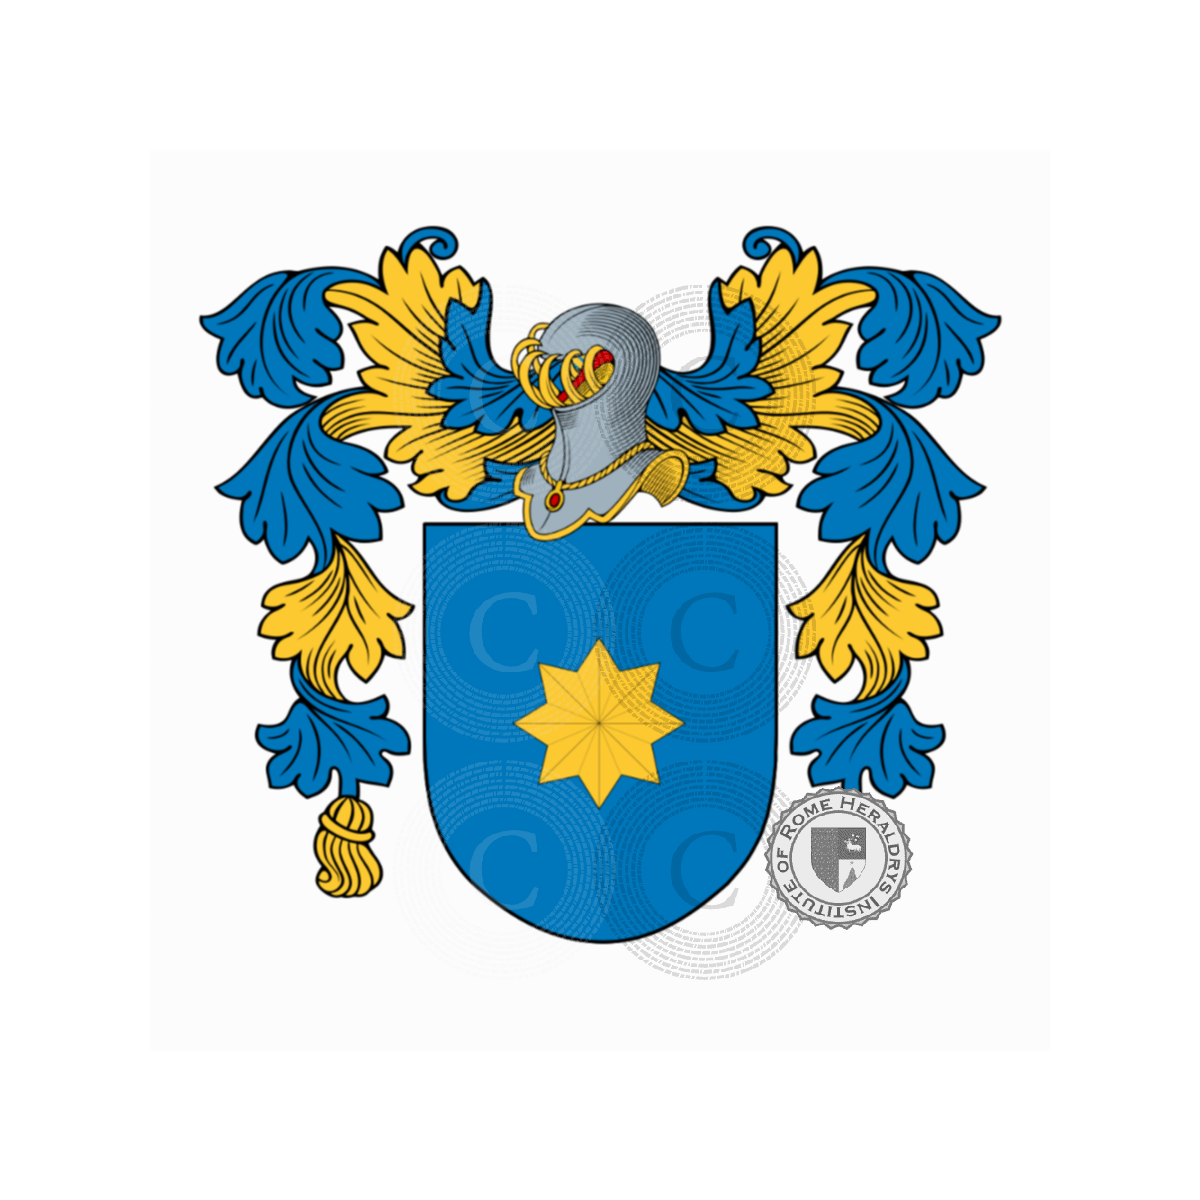 Coat of arms of familyReis